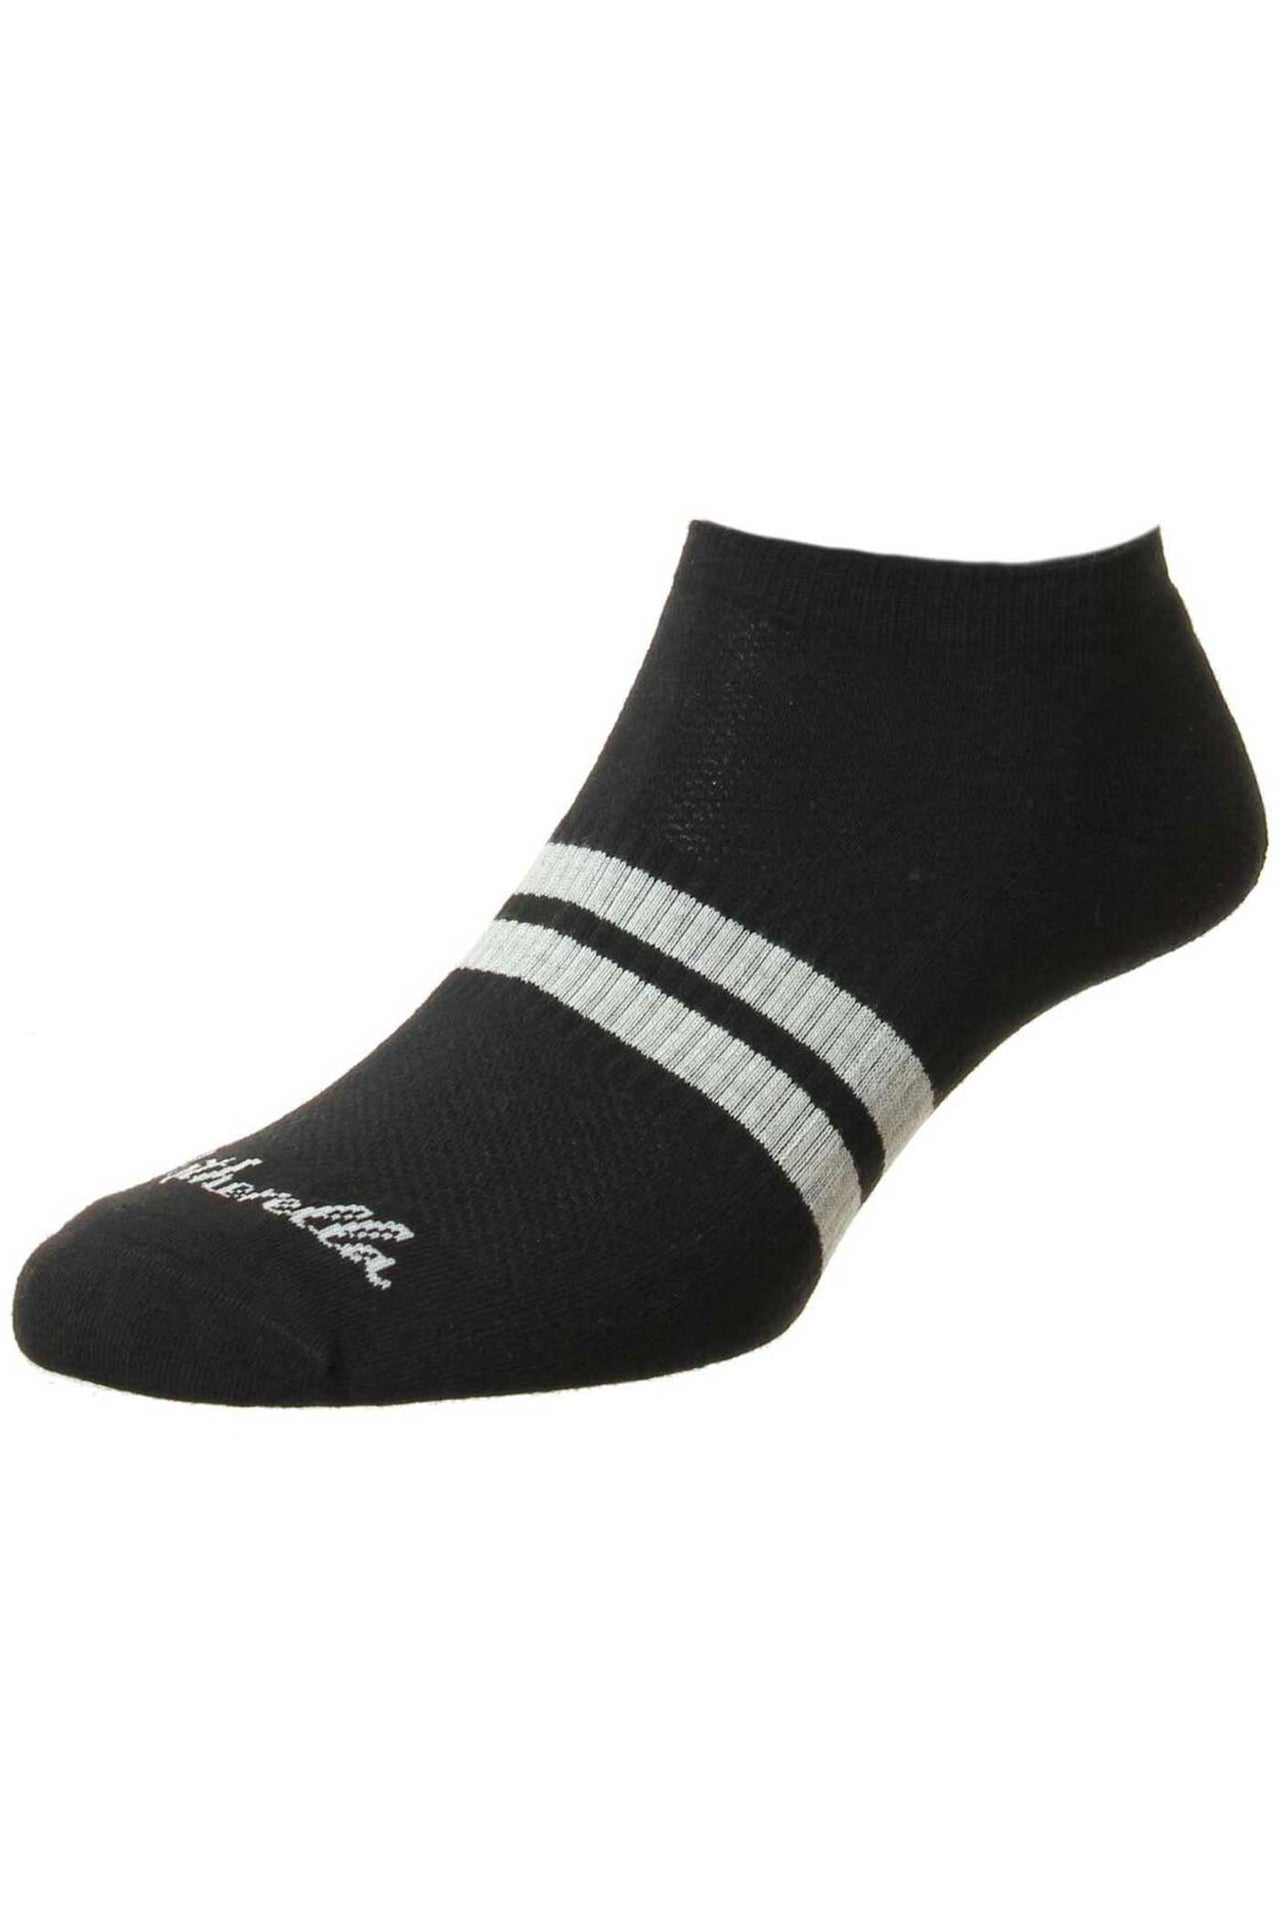 PANTHERELLA Sprint Sports Luxe Cotton Men's Socks BLACK